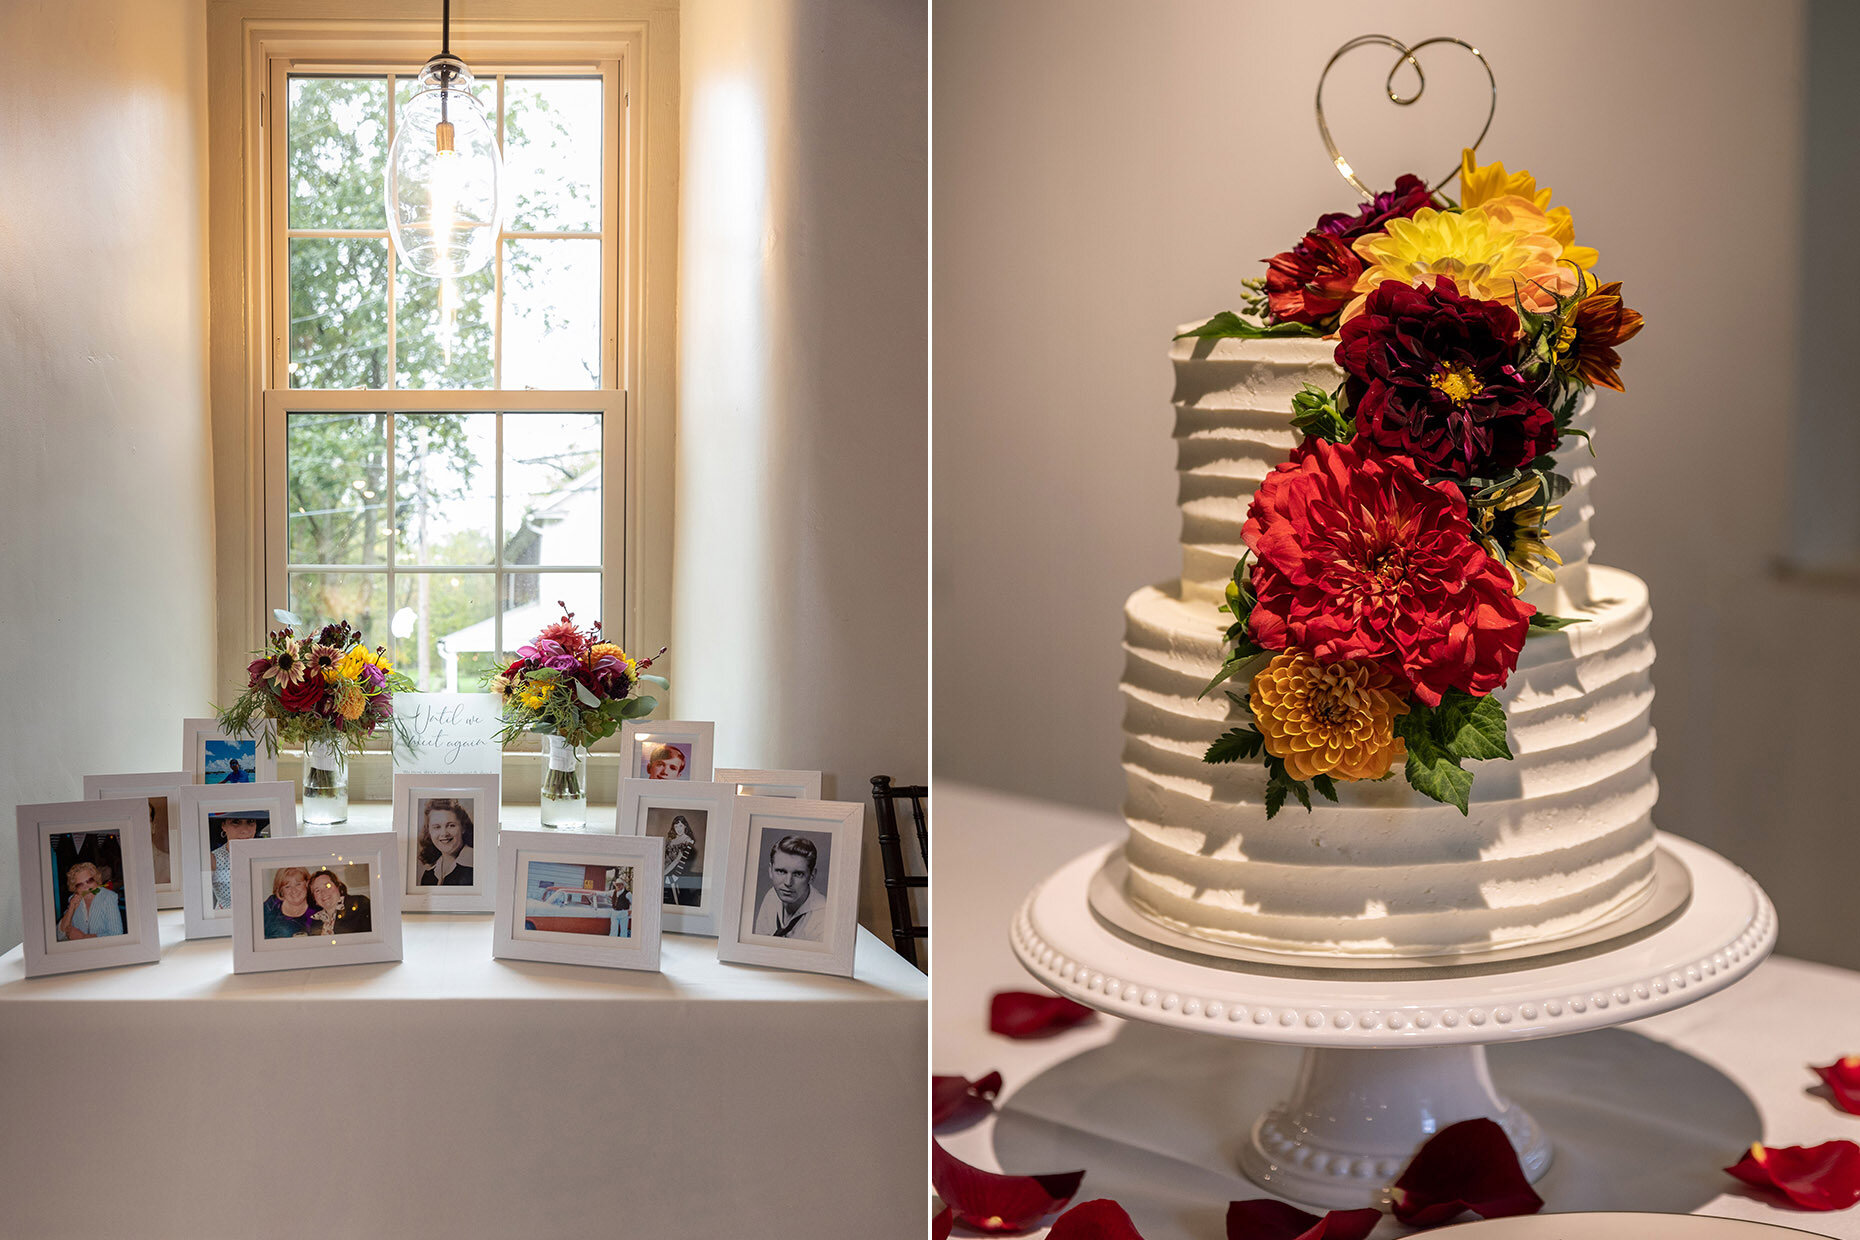 Wedding Cake &amp; Memory Table at reception 